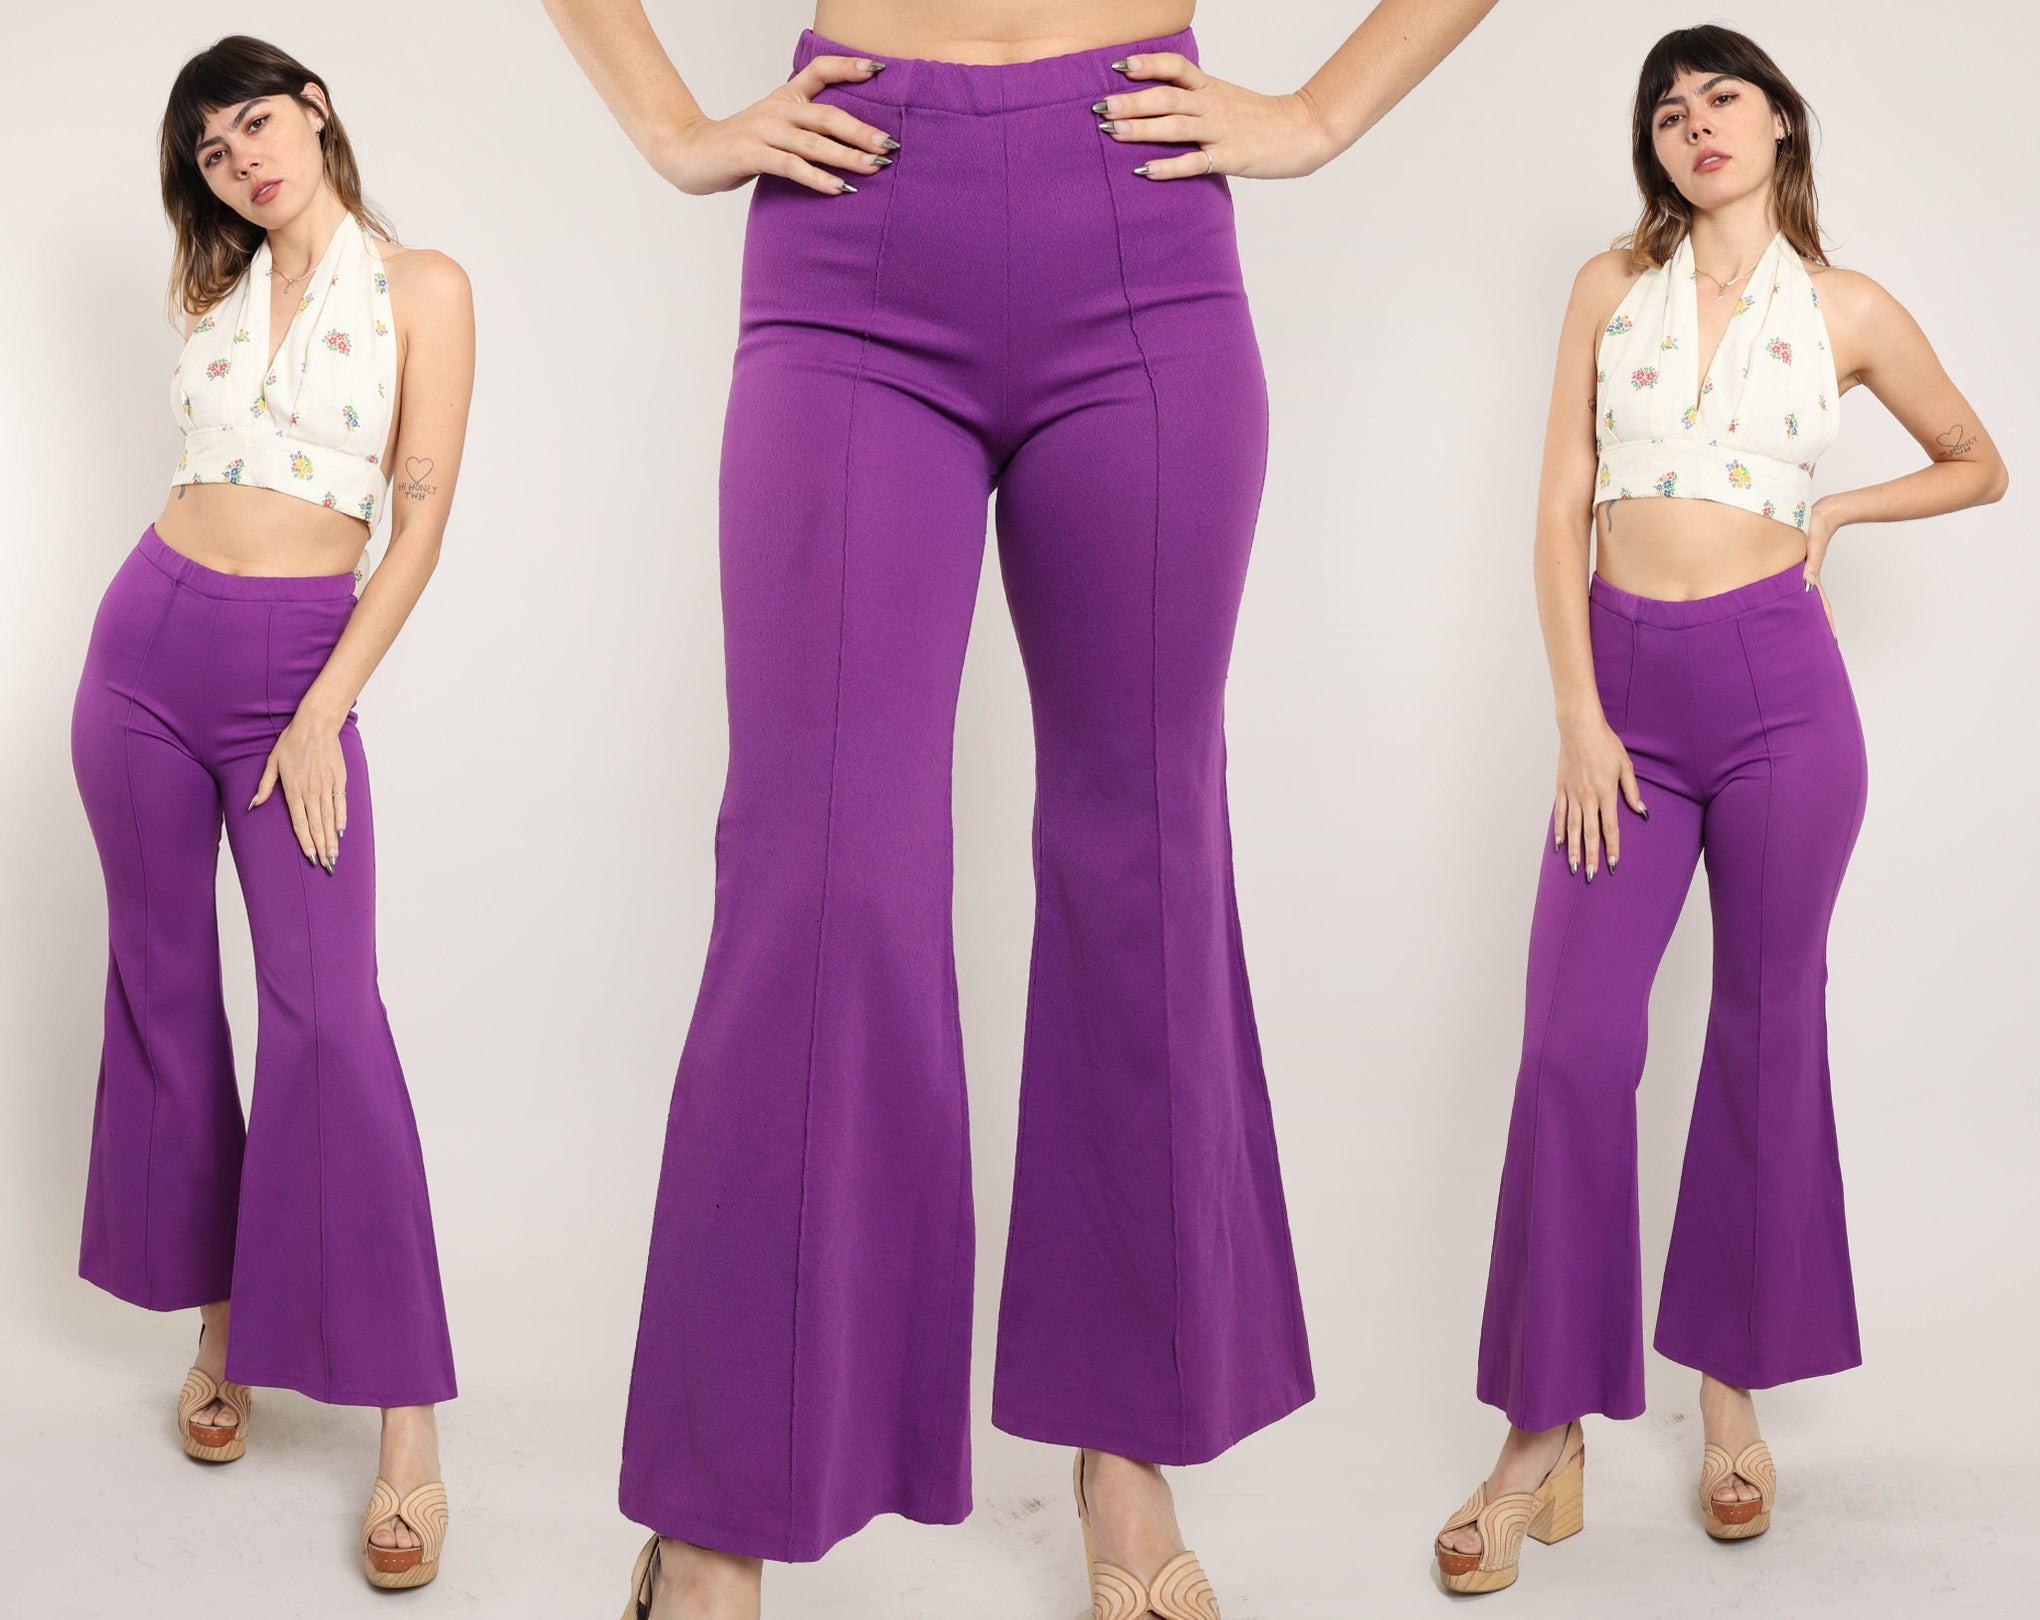 70s Fashion on X: Everyone needs a pair of purple pants #1970s #fashion # purple #flares  / X